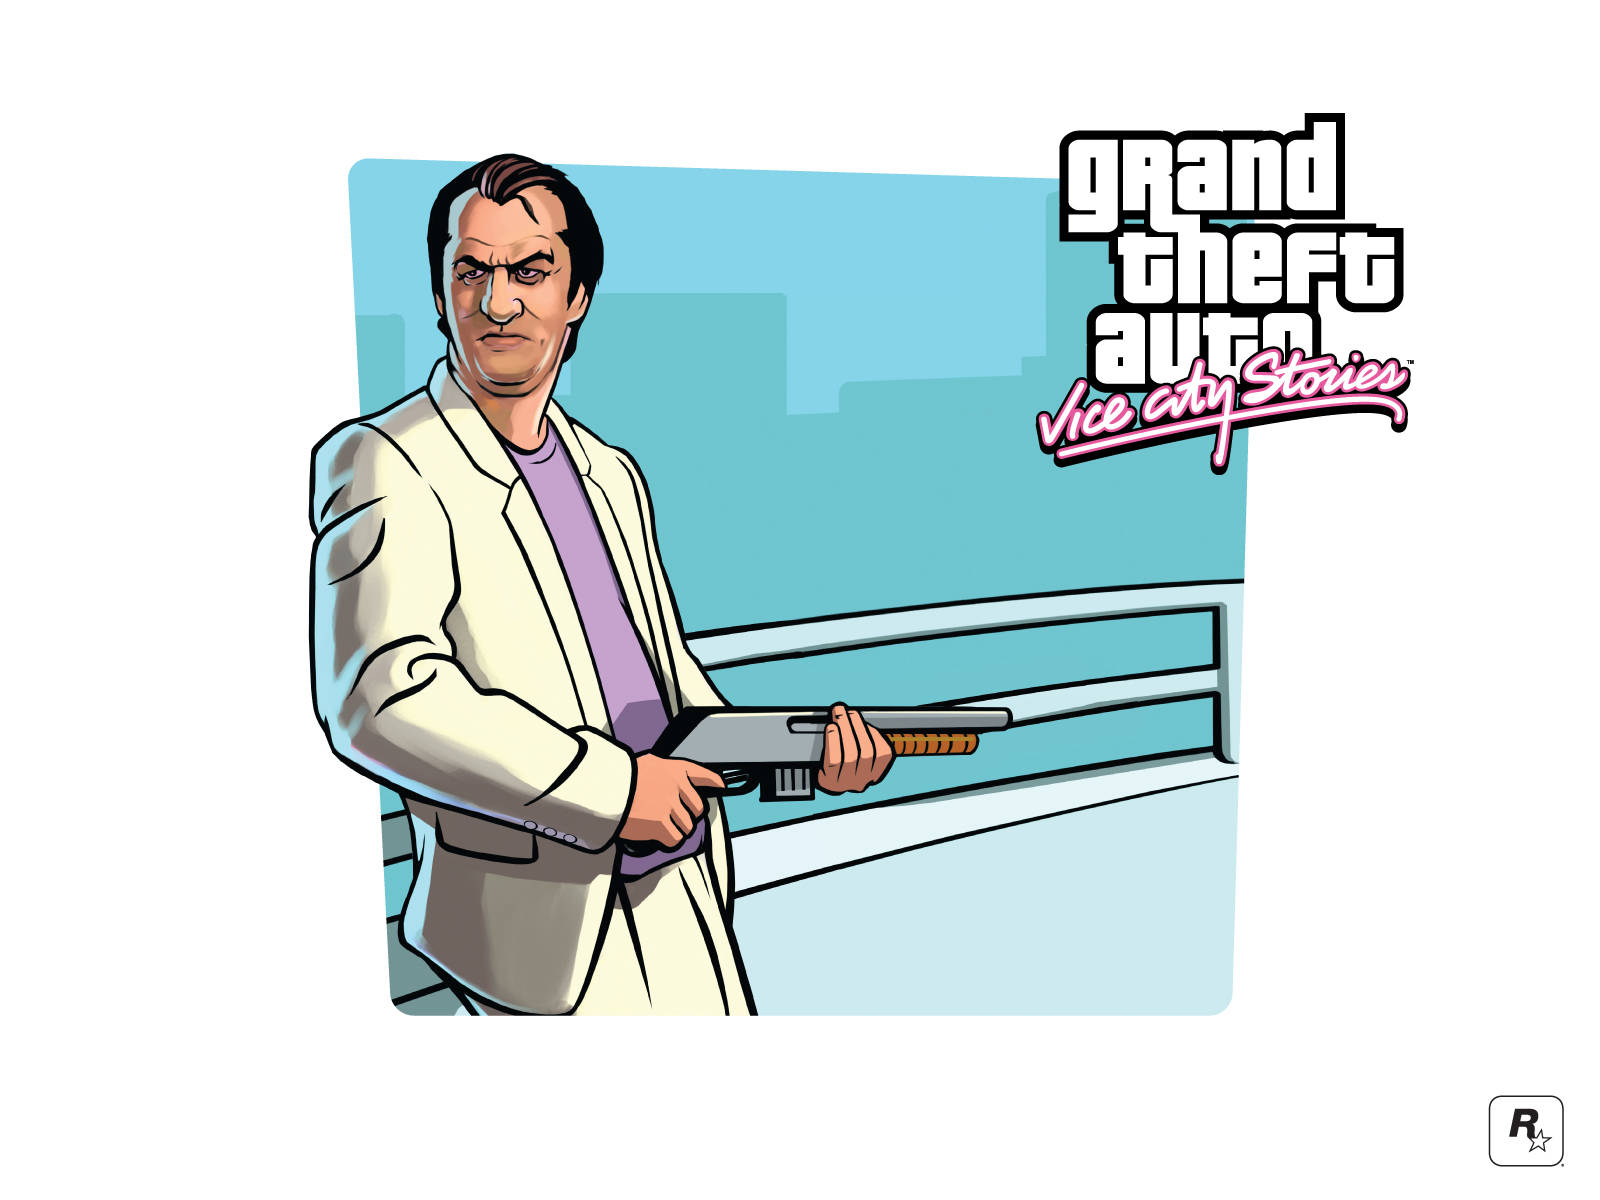 Free Grand Theft Auto Wallpaper Downloads, [200+] Grand Theft Auto  Wallpapers for FREE 